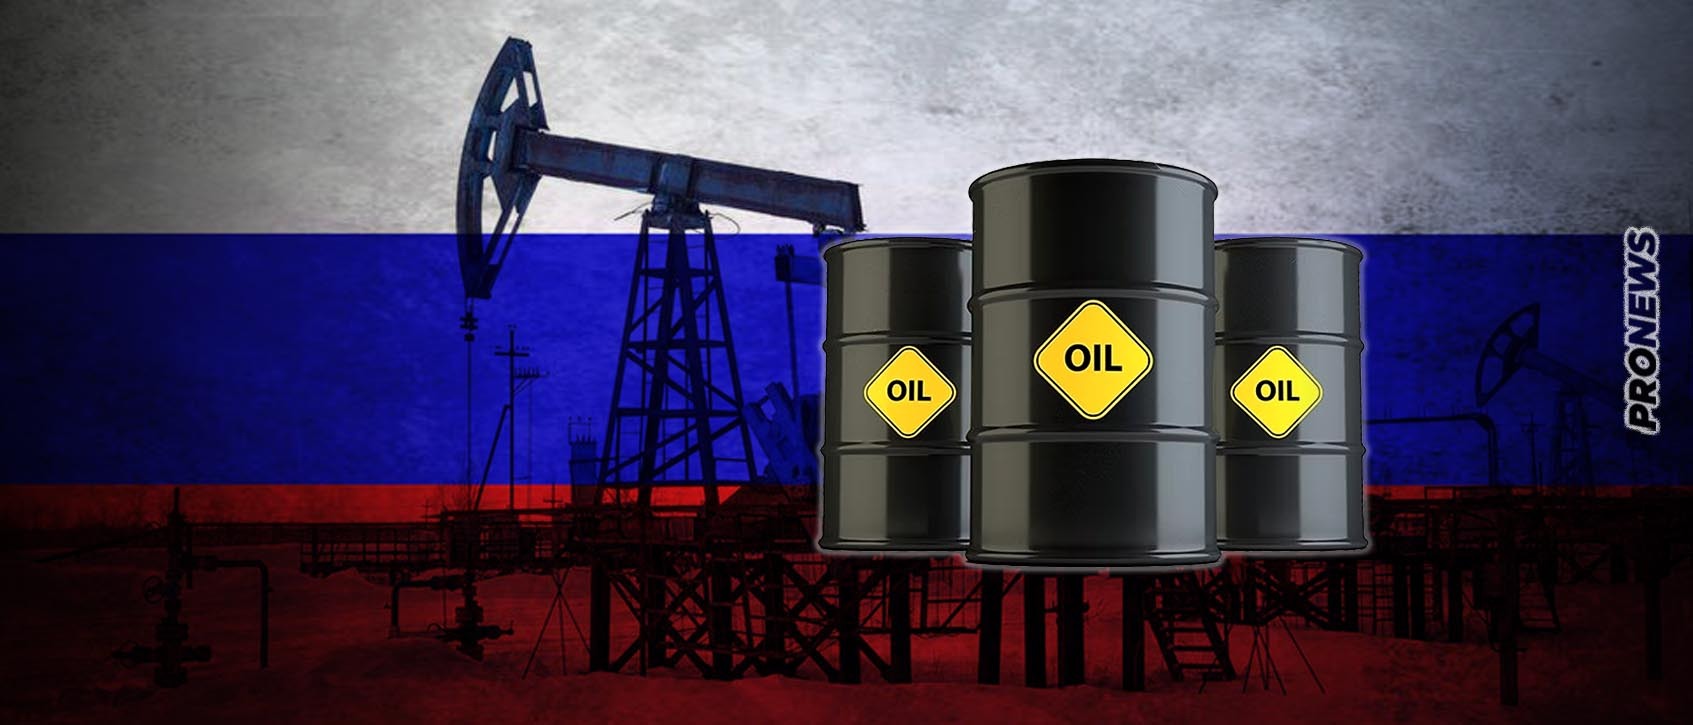 H Ρωσία μειώνει την παραγωγή πετρελαίου κατά 500.000 βαρέλια την ημέρα! – Αυξάνονται οι τιμές των καυσίμων!